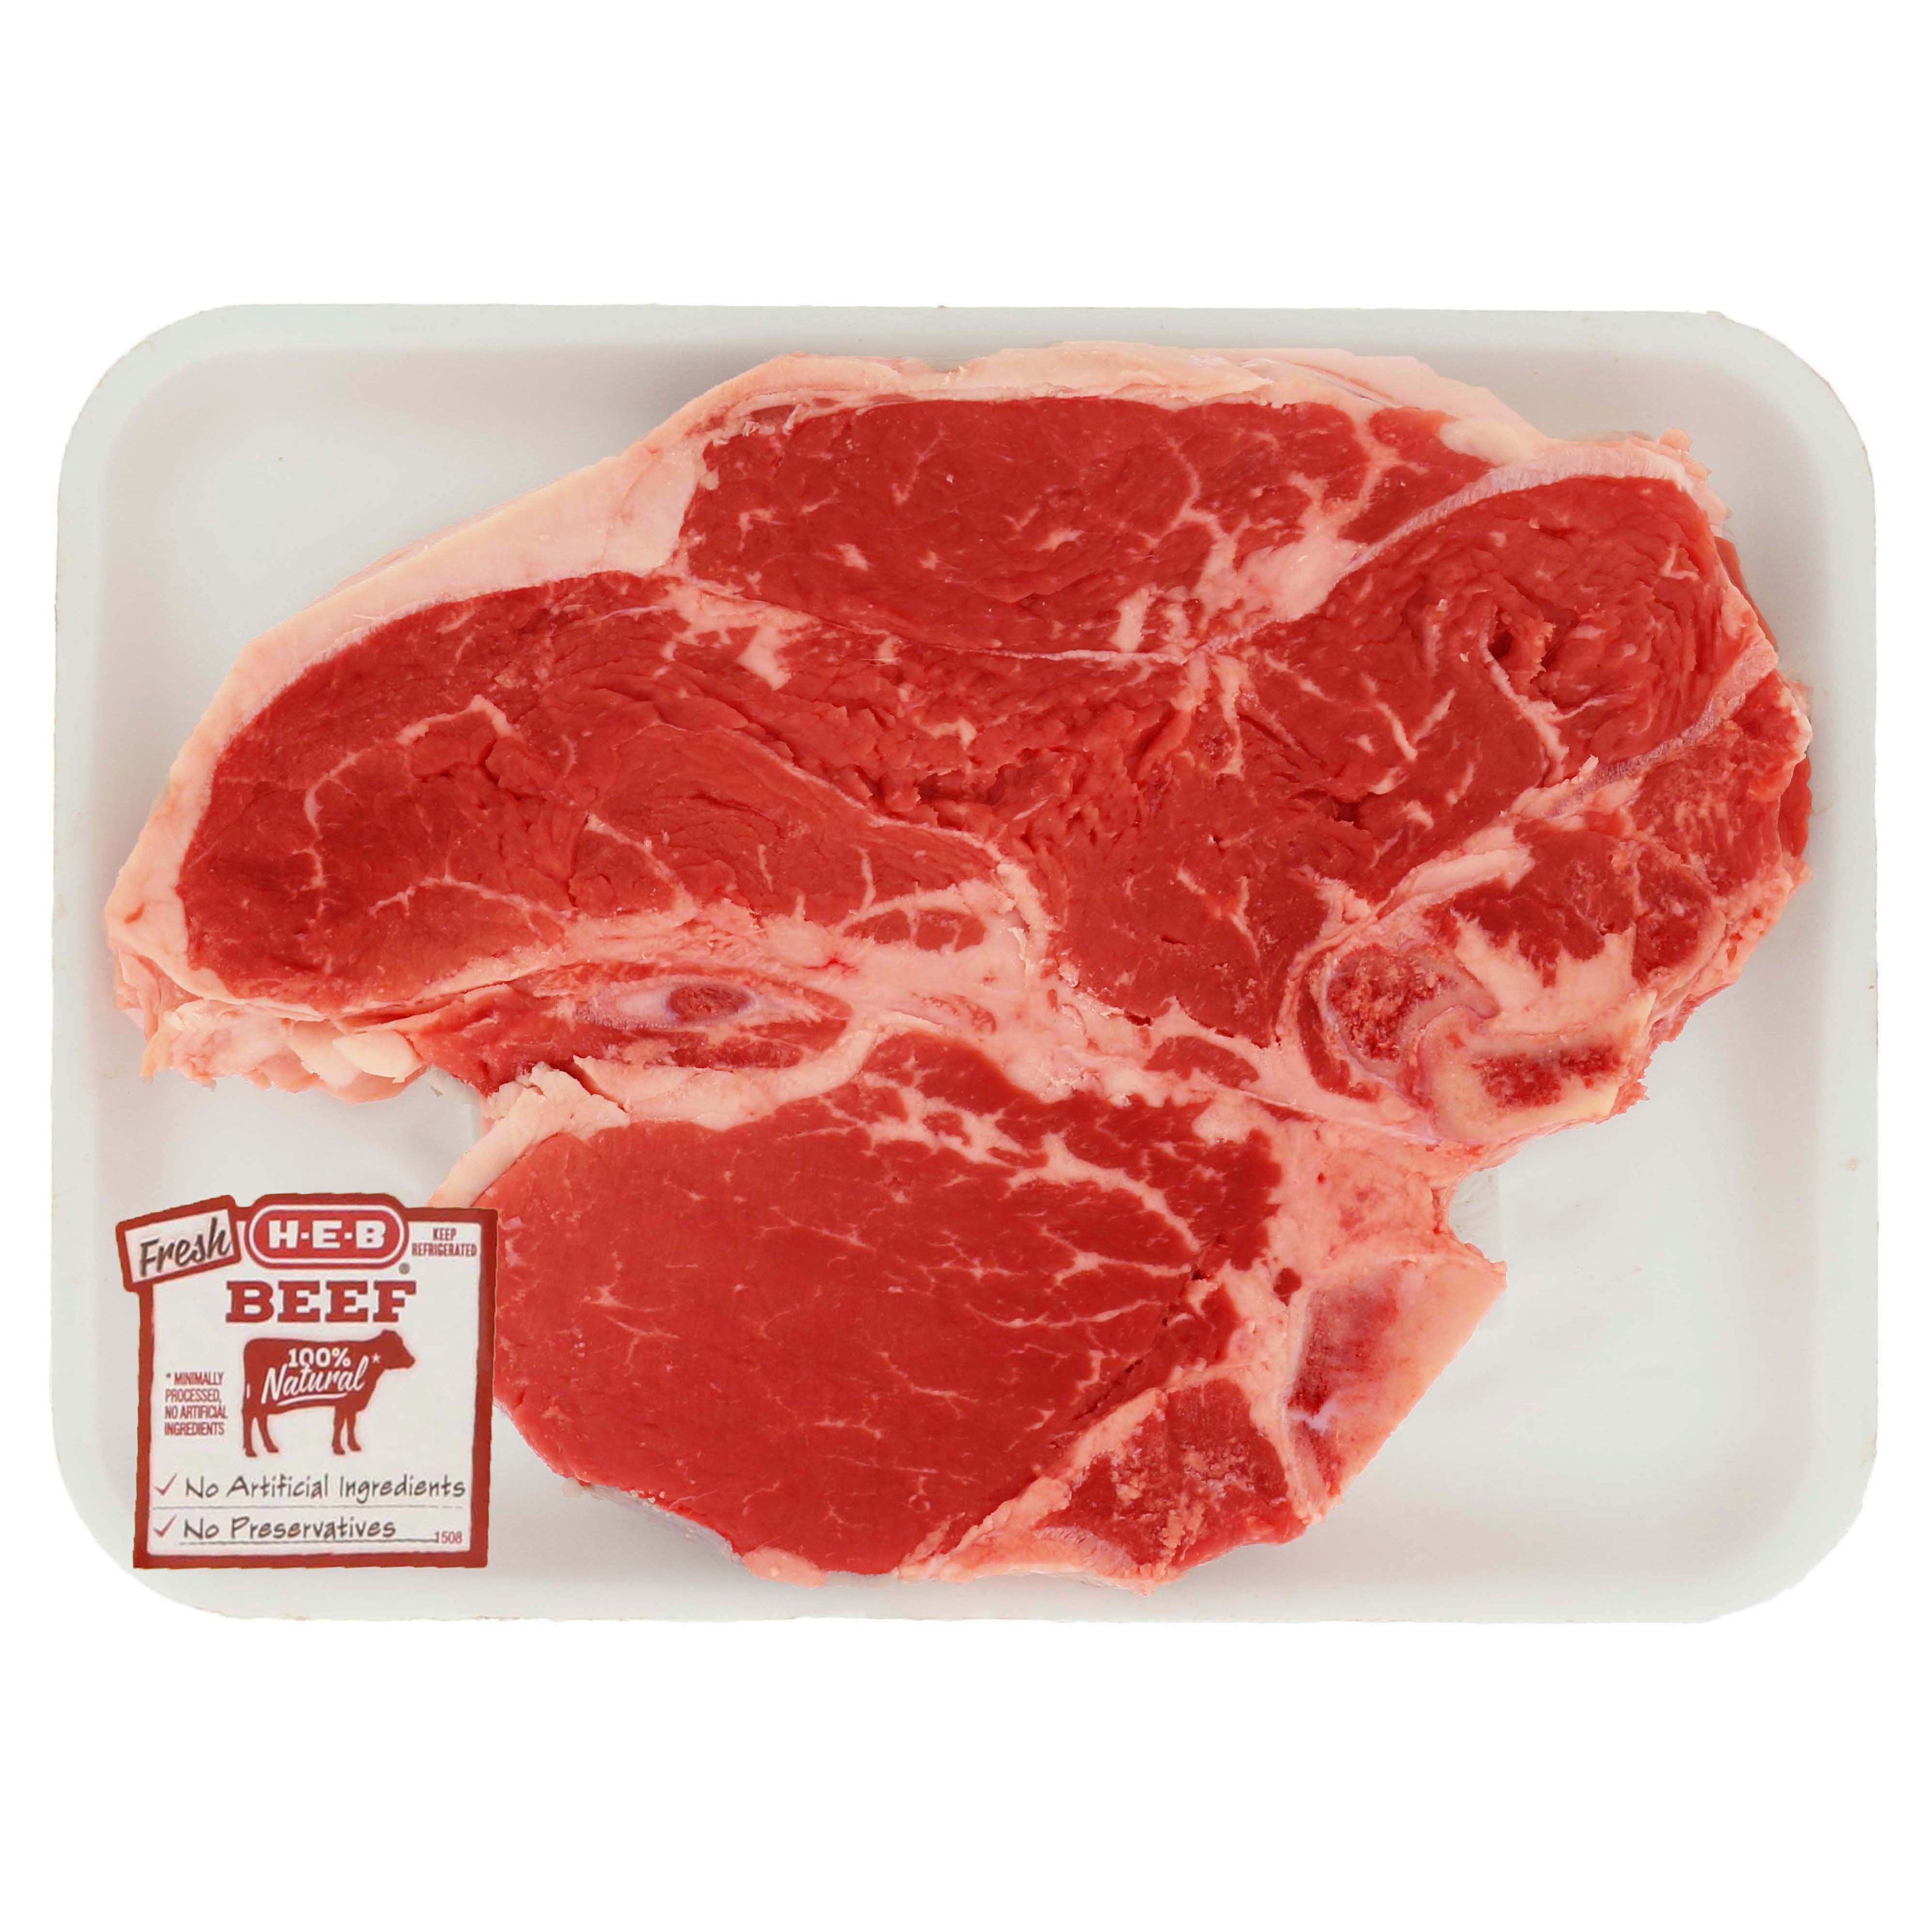 H E B Beef Porterhouse Steak Usda Select Shop Beef At H E B